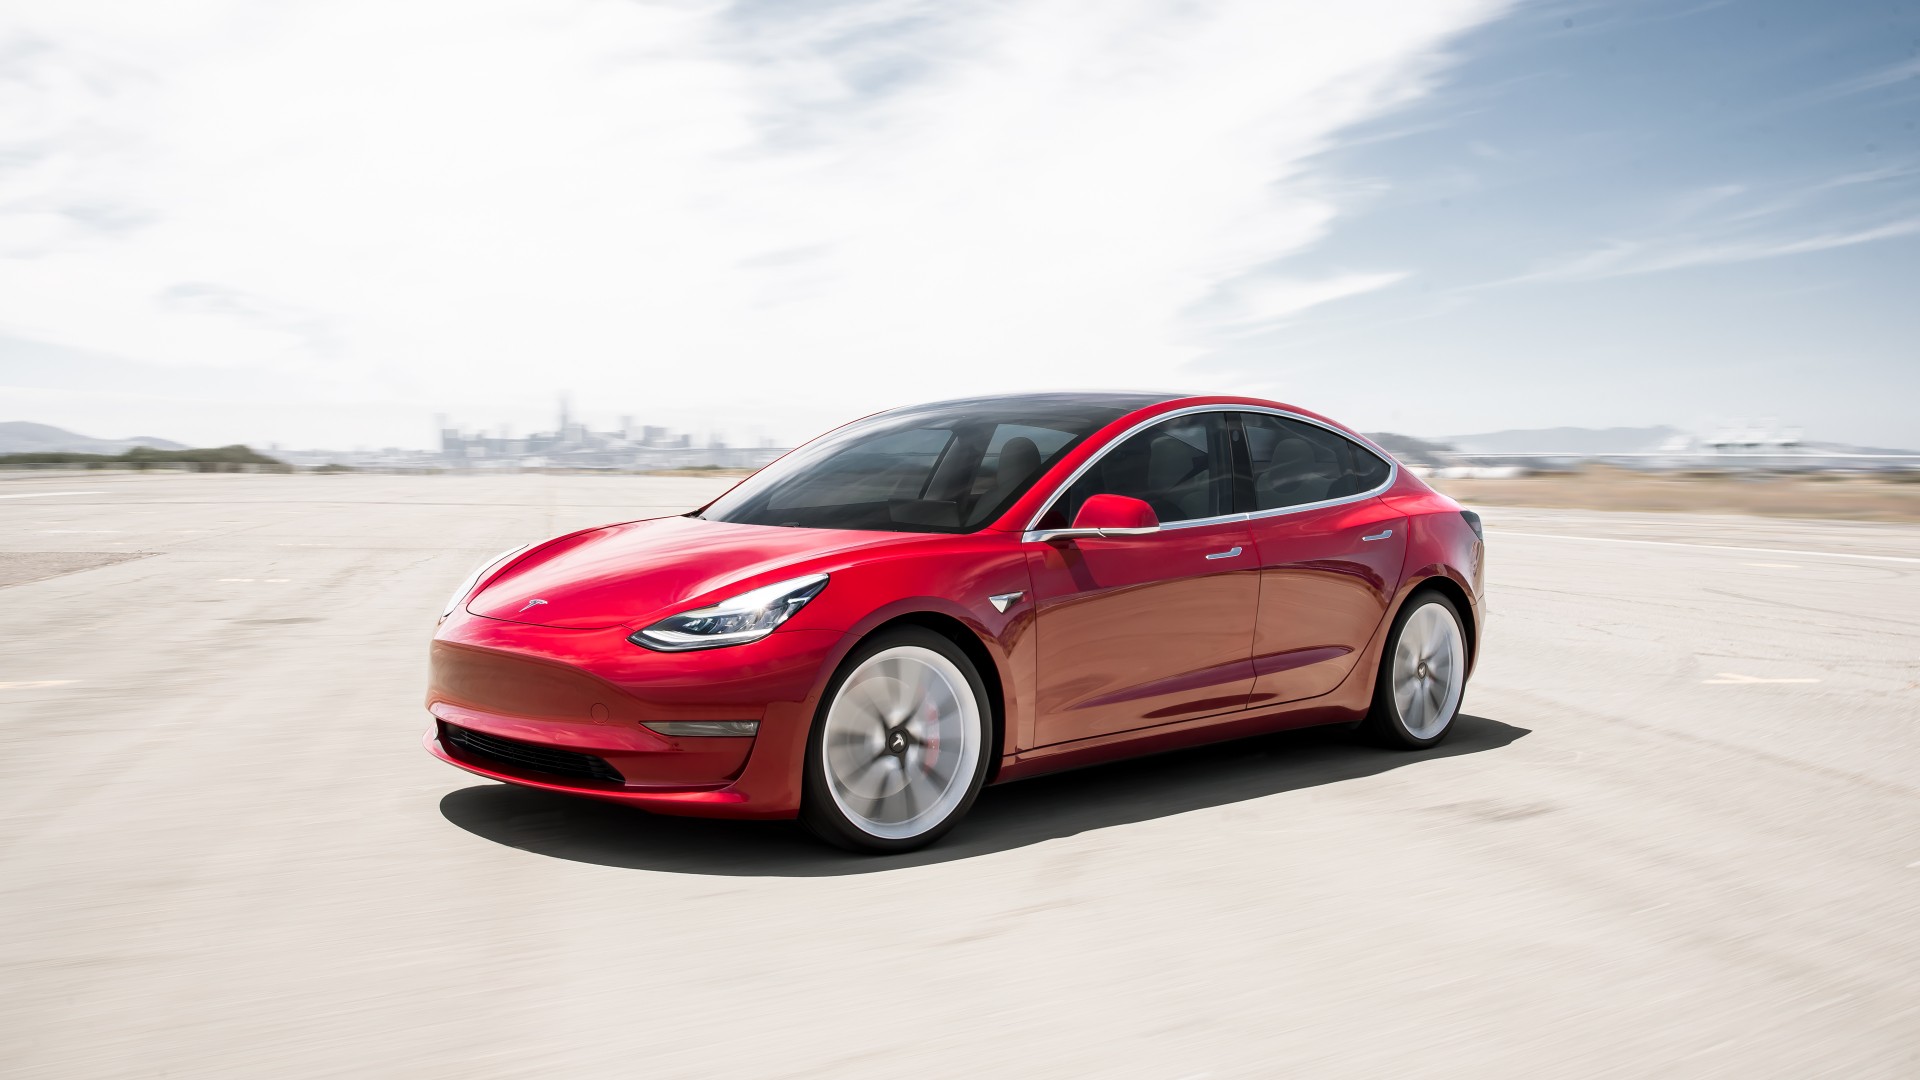 2020 Tesla Model 3 is the most energy-efficient US passenger vehicle